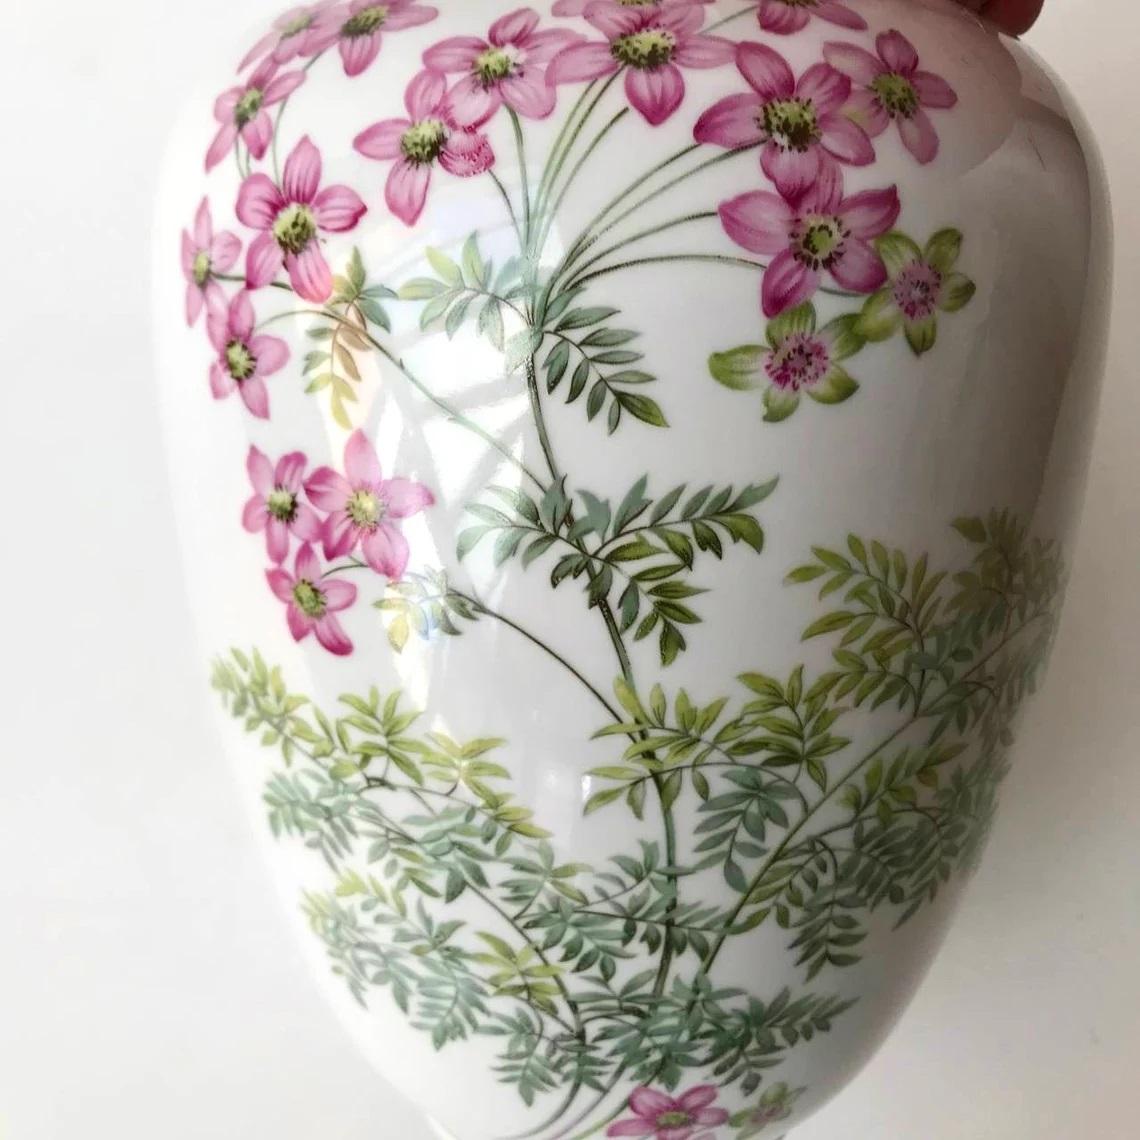 Mid-Century Modern Vintage Porcelain Vase with Floral Pattern by Weimar, 1950s